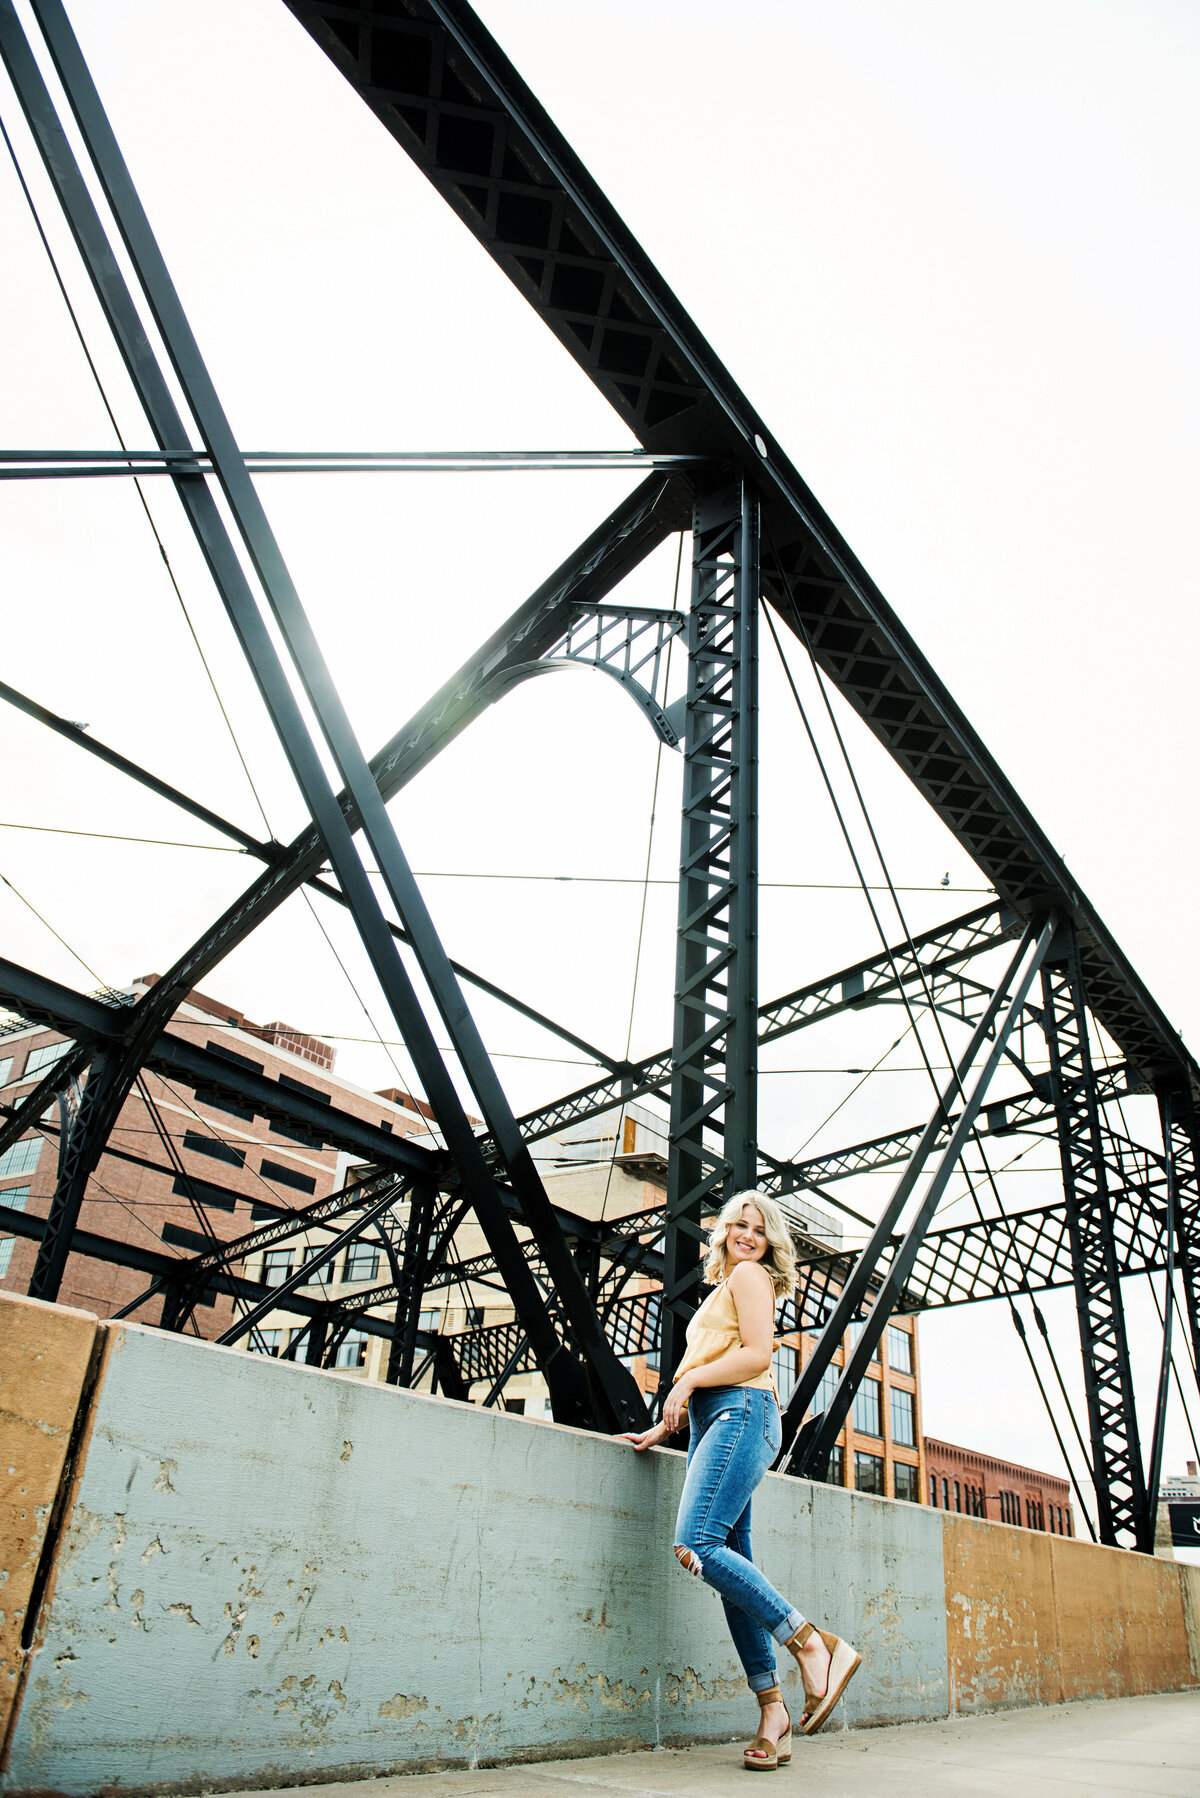 high school senior photo of girl in street fashion leaning against old railroad bridge